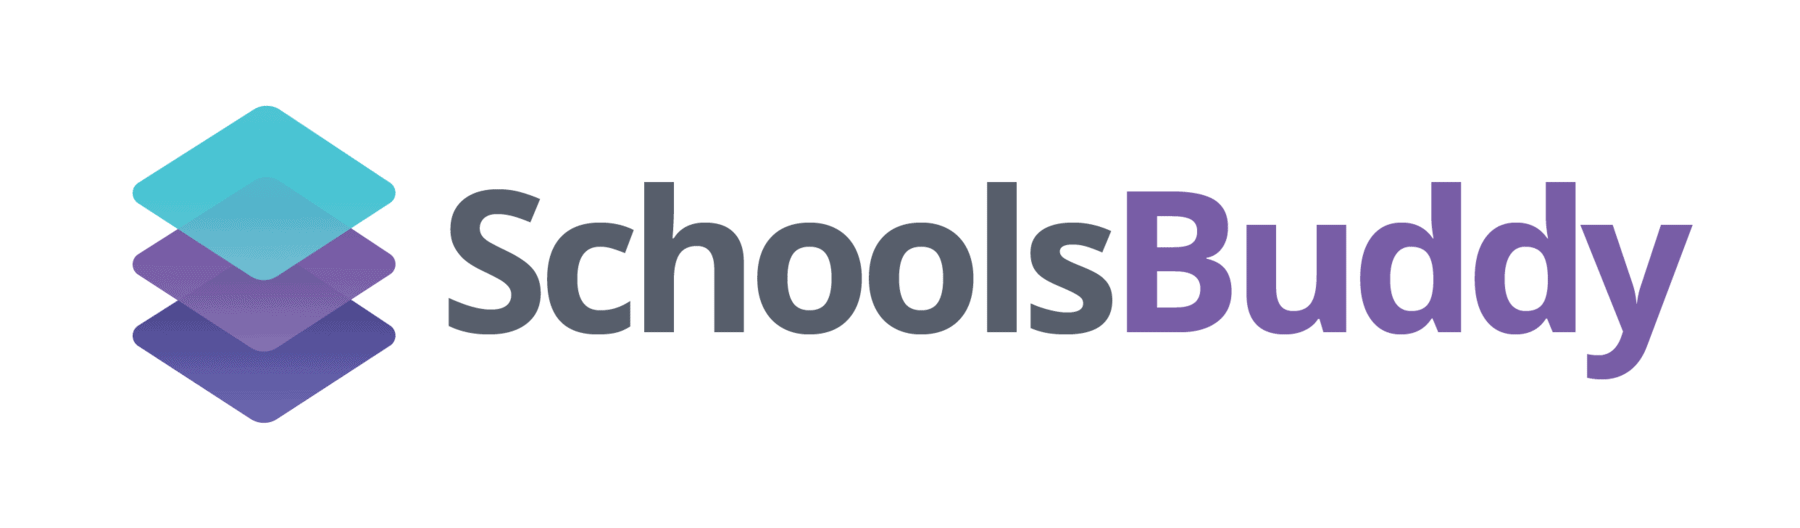 logo-schoolsbuddy